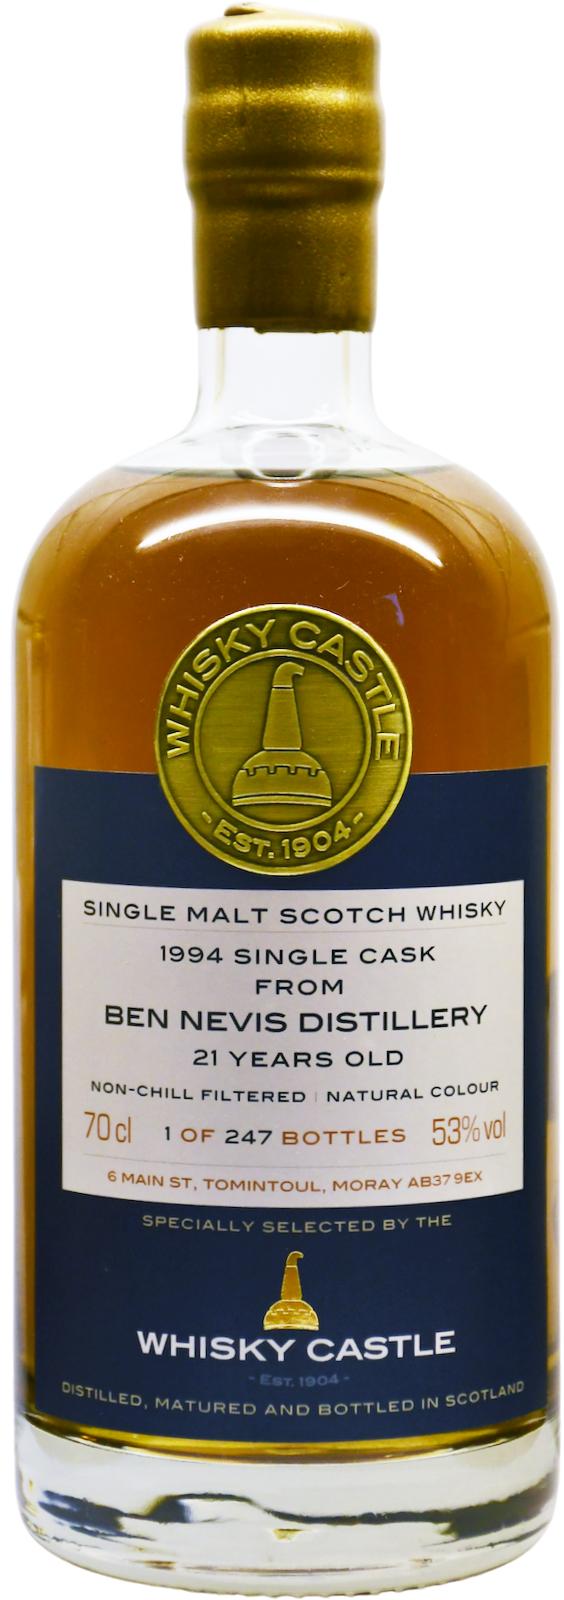 Ben Nevis 1994 TWhC Whisky Castle Exclusive The Whisky Castle Tomintoul Scotland 53% 700ml